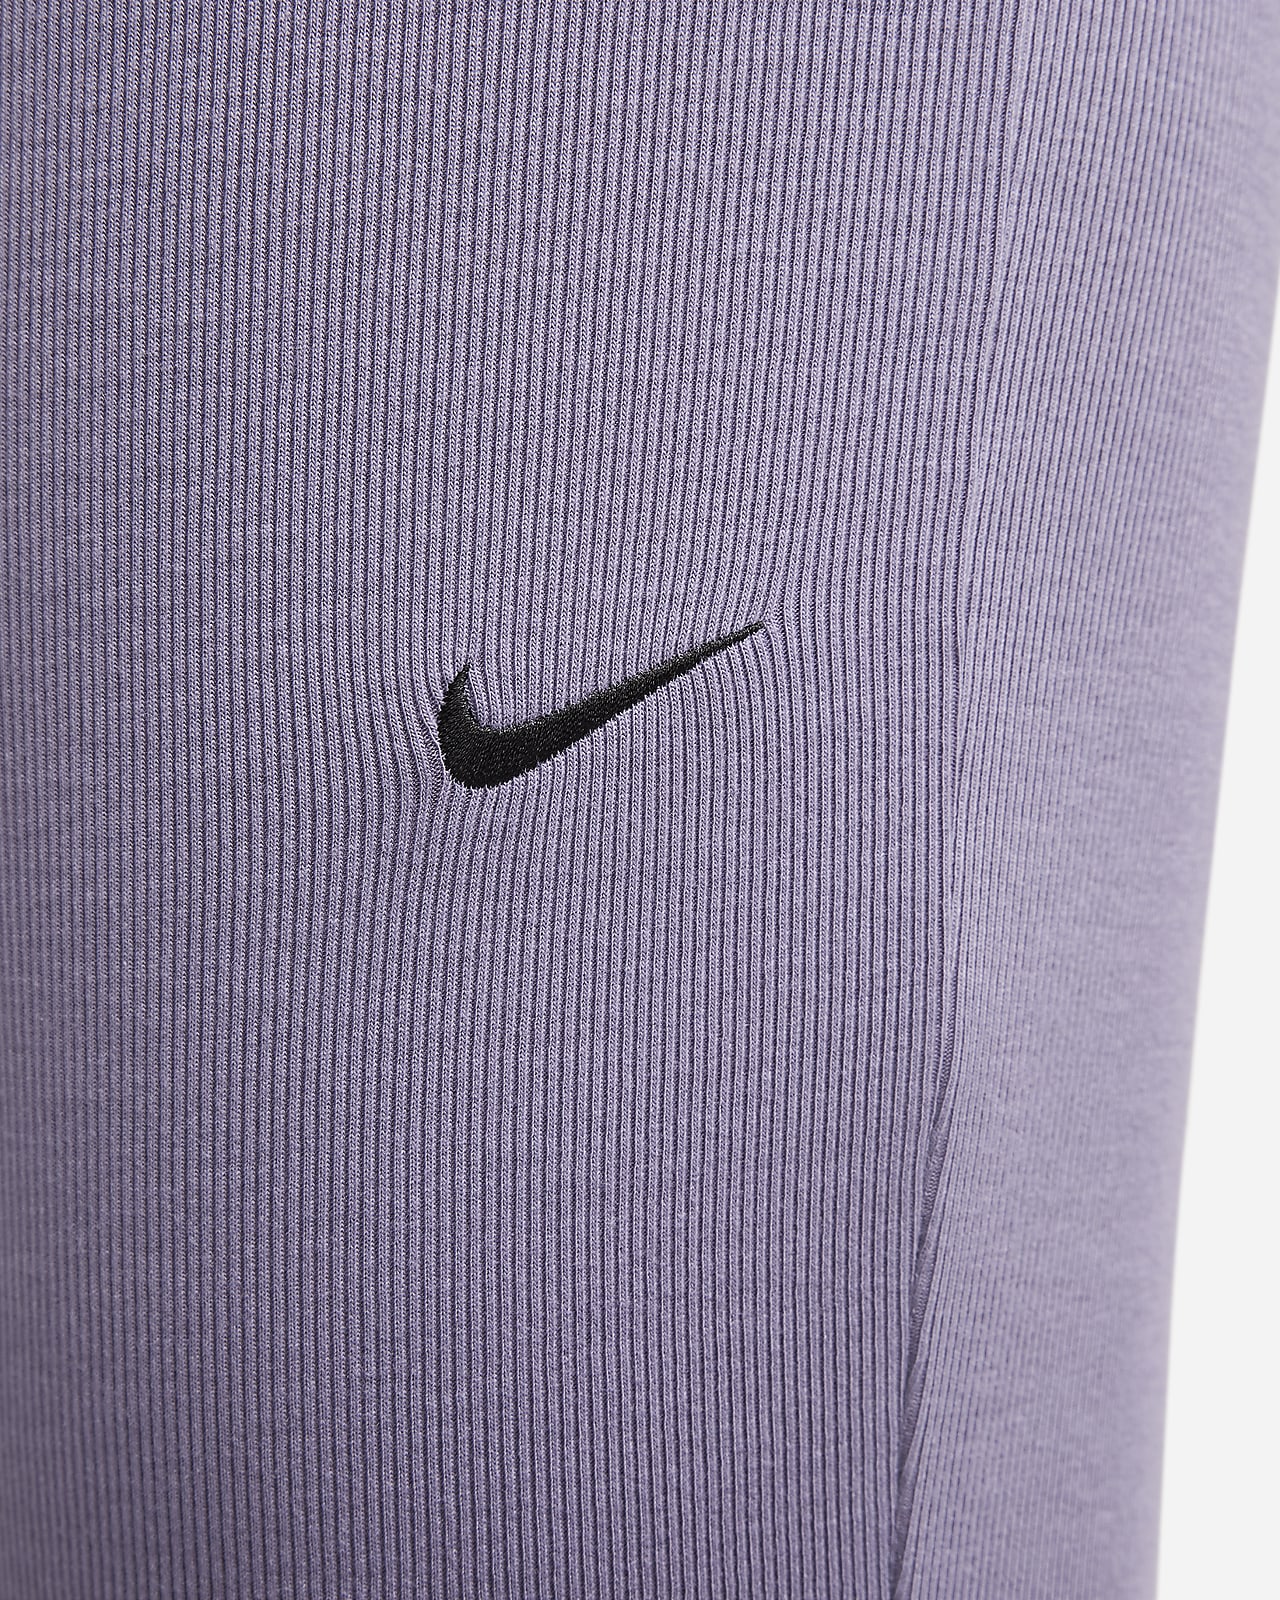 Nike women's sweatpants winter new loose knitted leggings casual